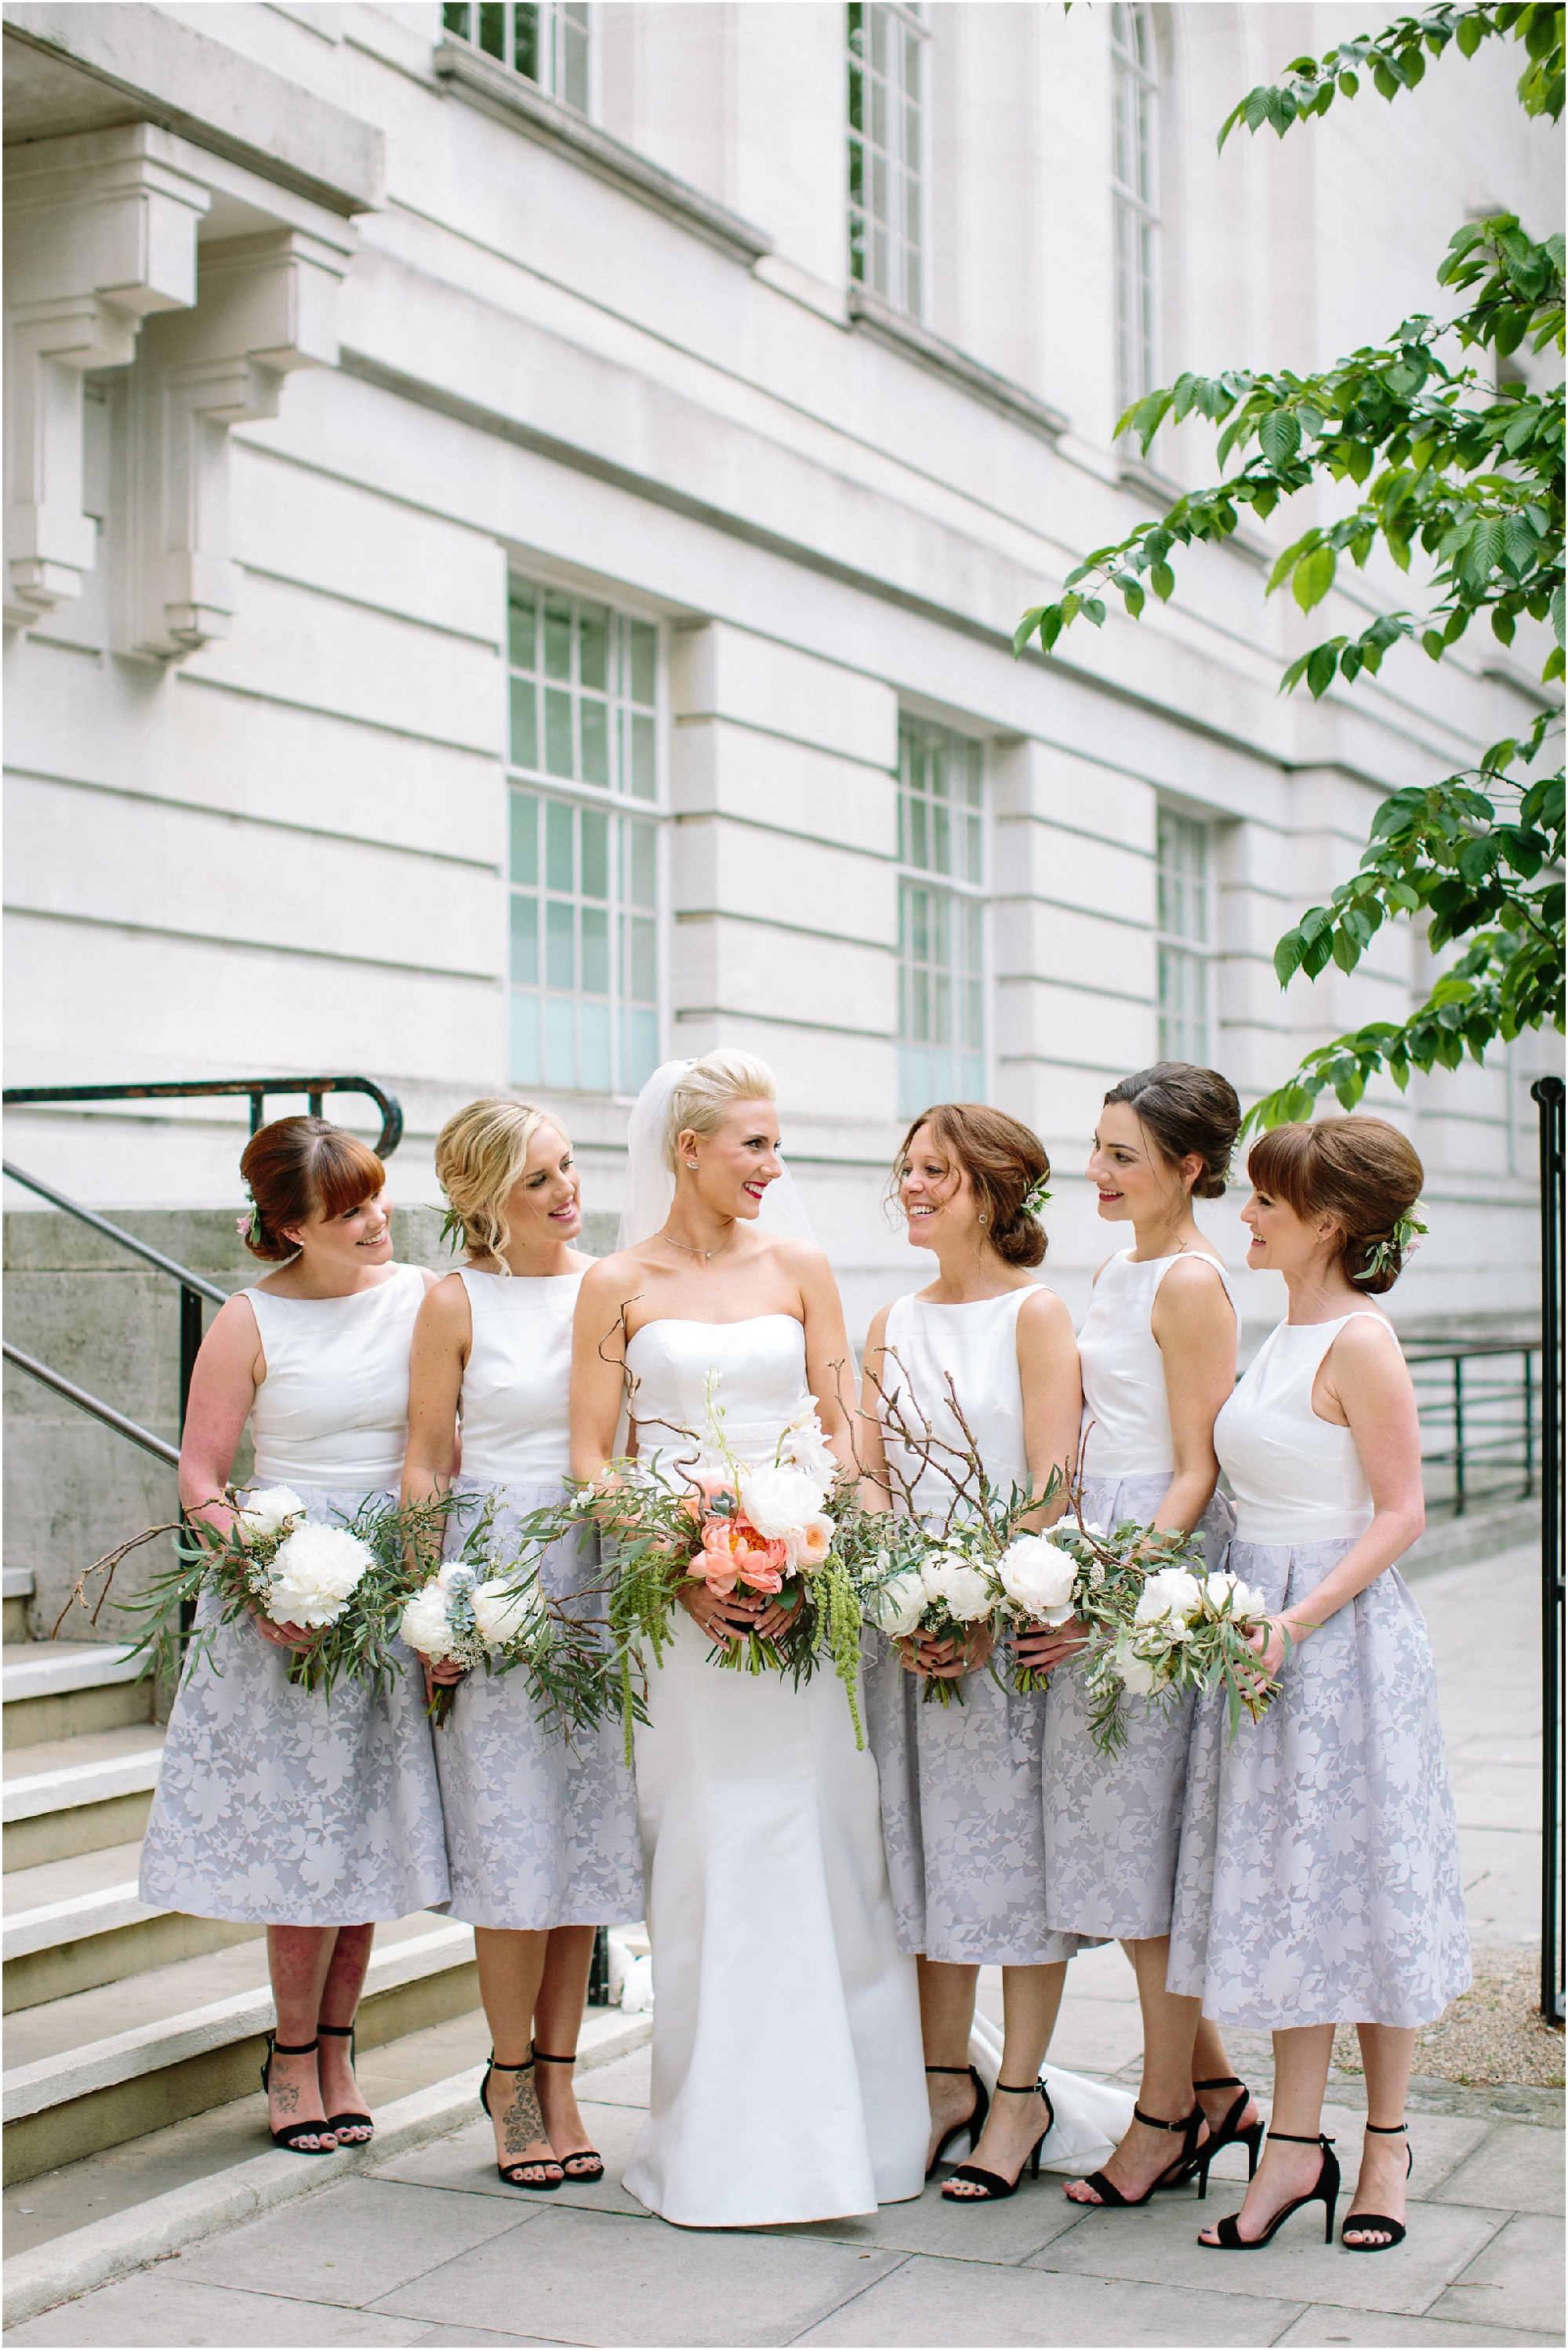 Bridesmaids in short dresses